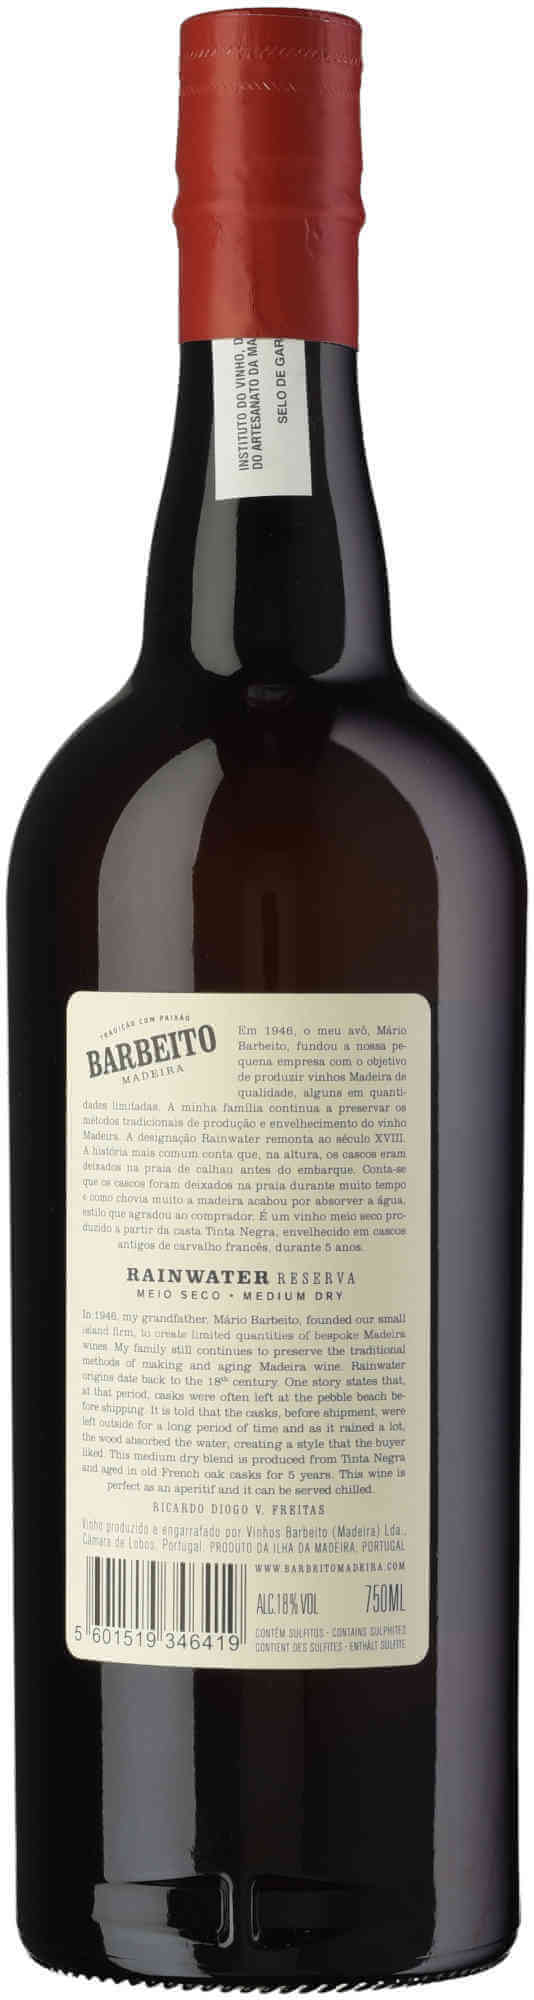 Barbeito-Rainwater-Reserva-75cl-back